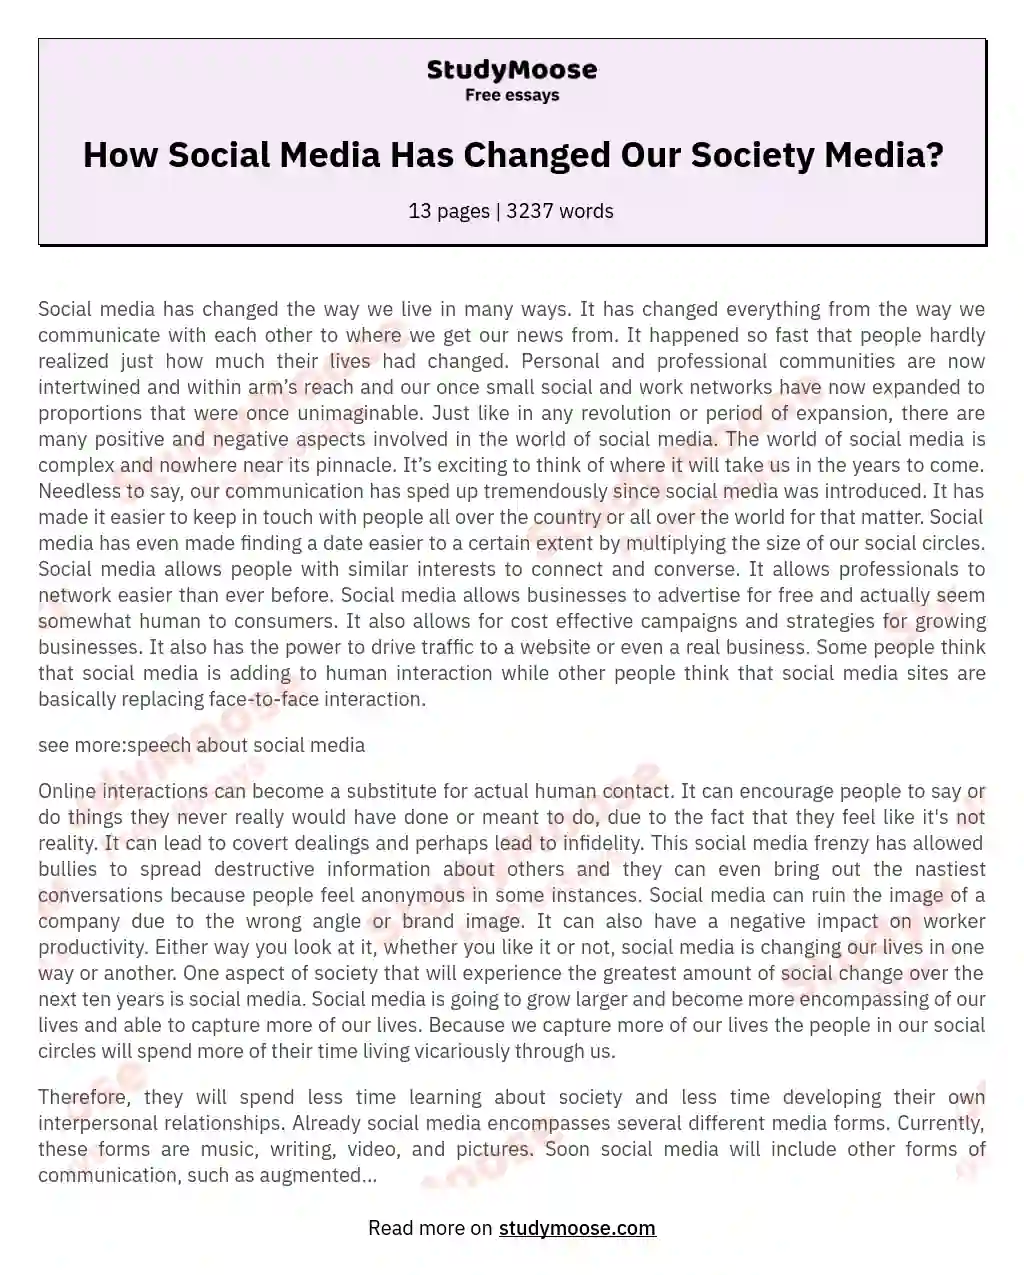 How Social Media Has Changed Our Society Media? essay